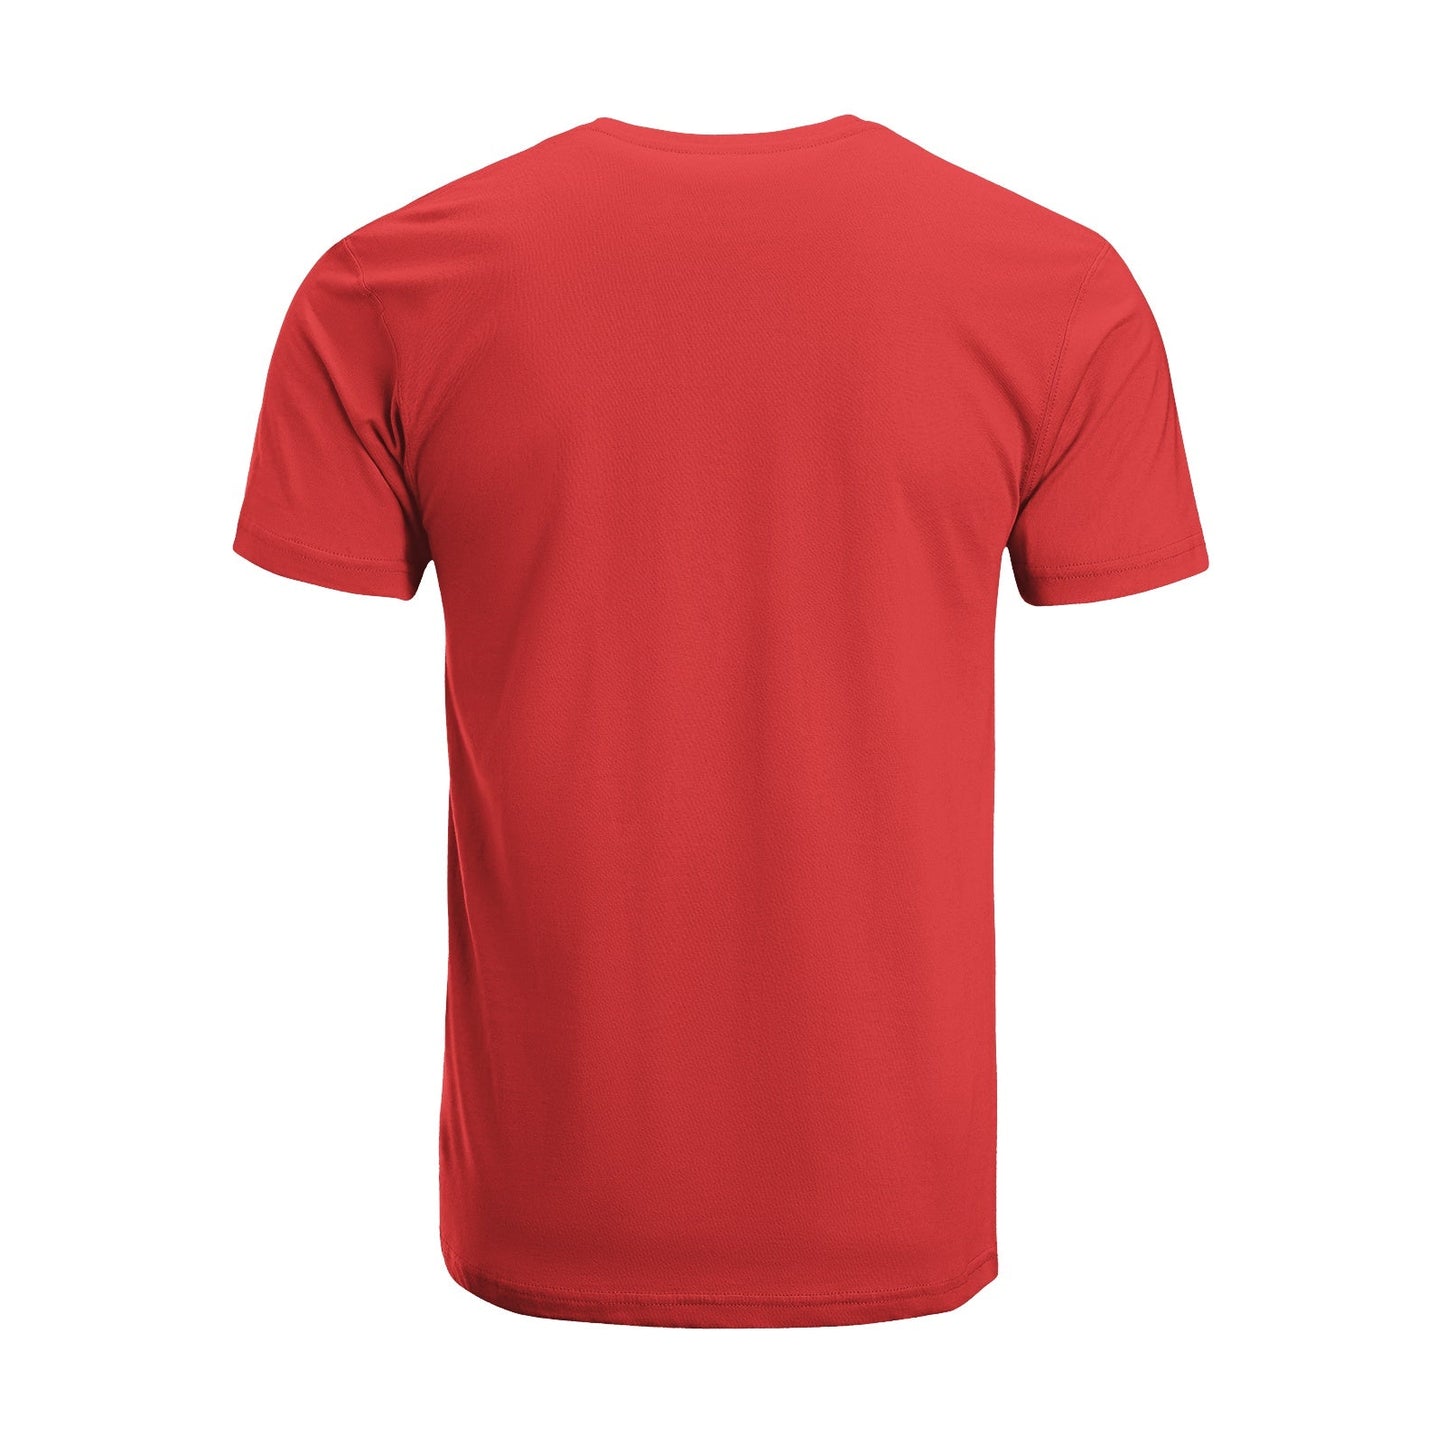 Unisex Short Sleeve Crew Neck Cotton Jersey T-Shirt MOM 17